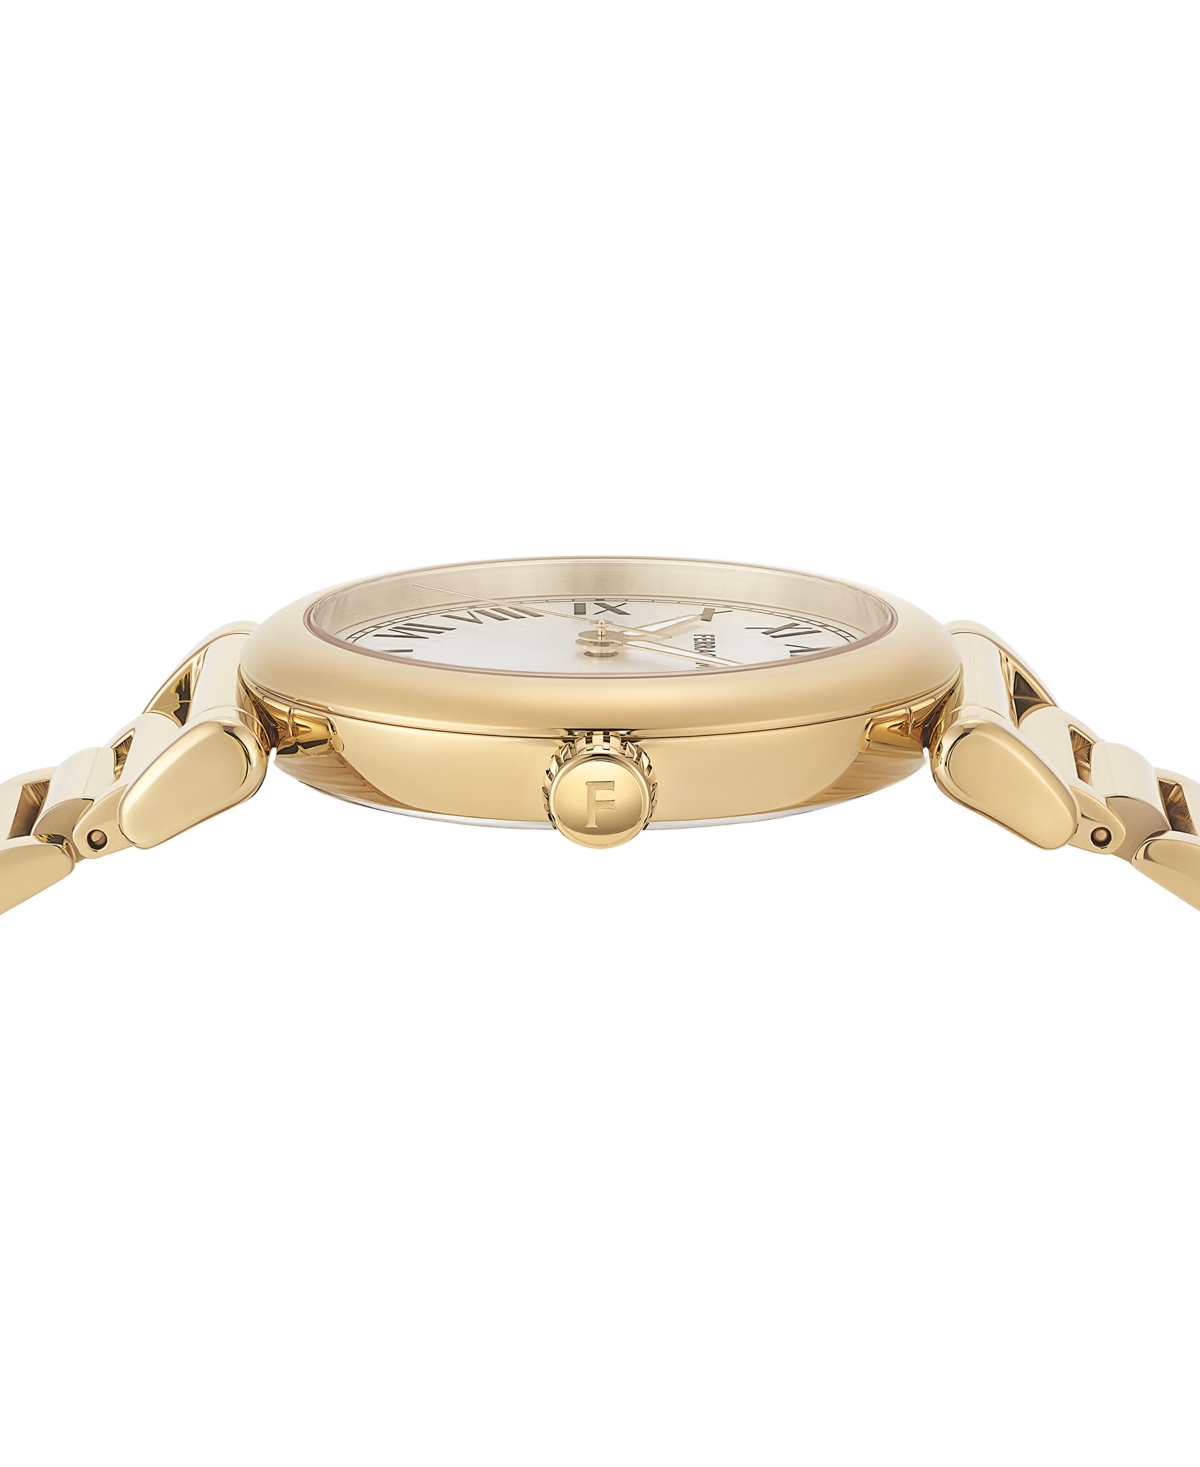 Shop Ferragamo Salvatore  Women's Swiss Gold Ion Plated Stainless Steel Bracelet Watch 36mm